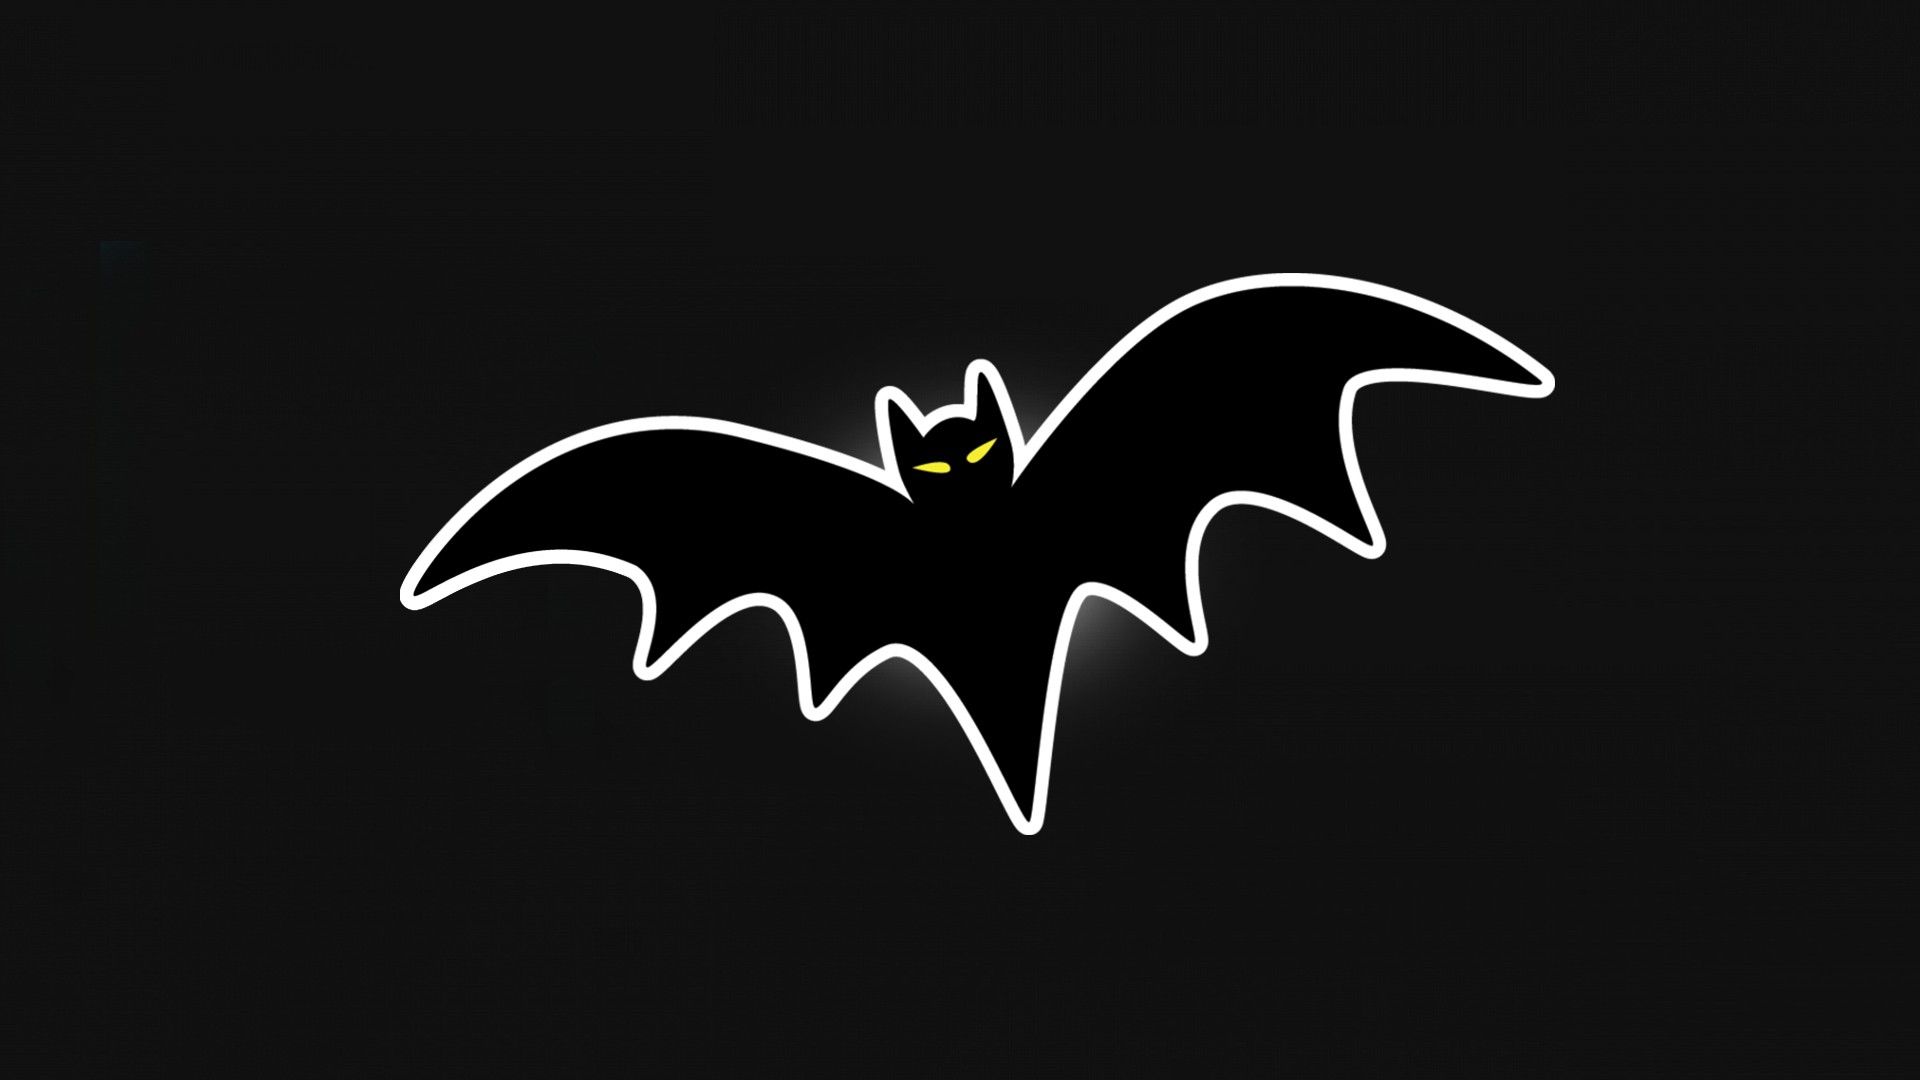 Halloween Bat Wallpaper Free Halloween Bat Background